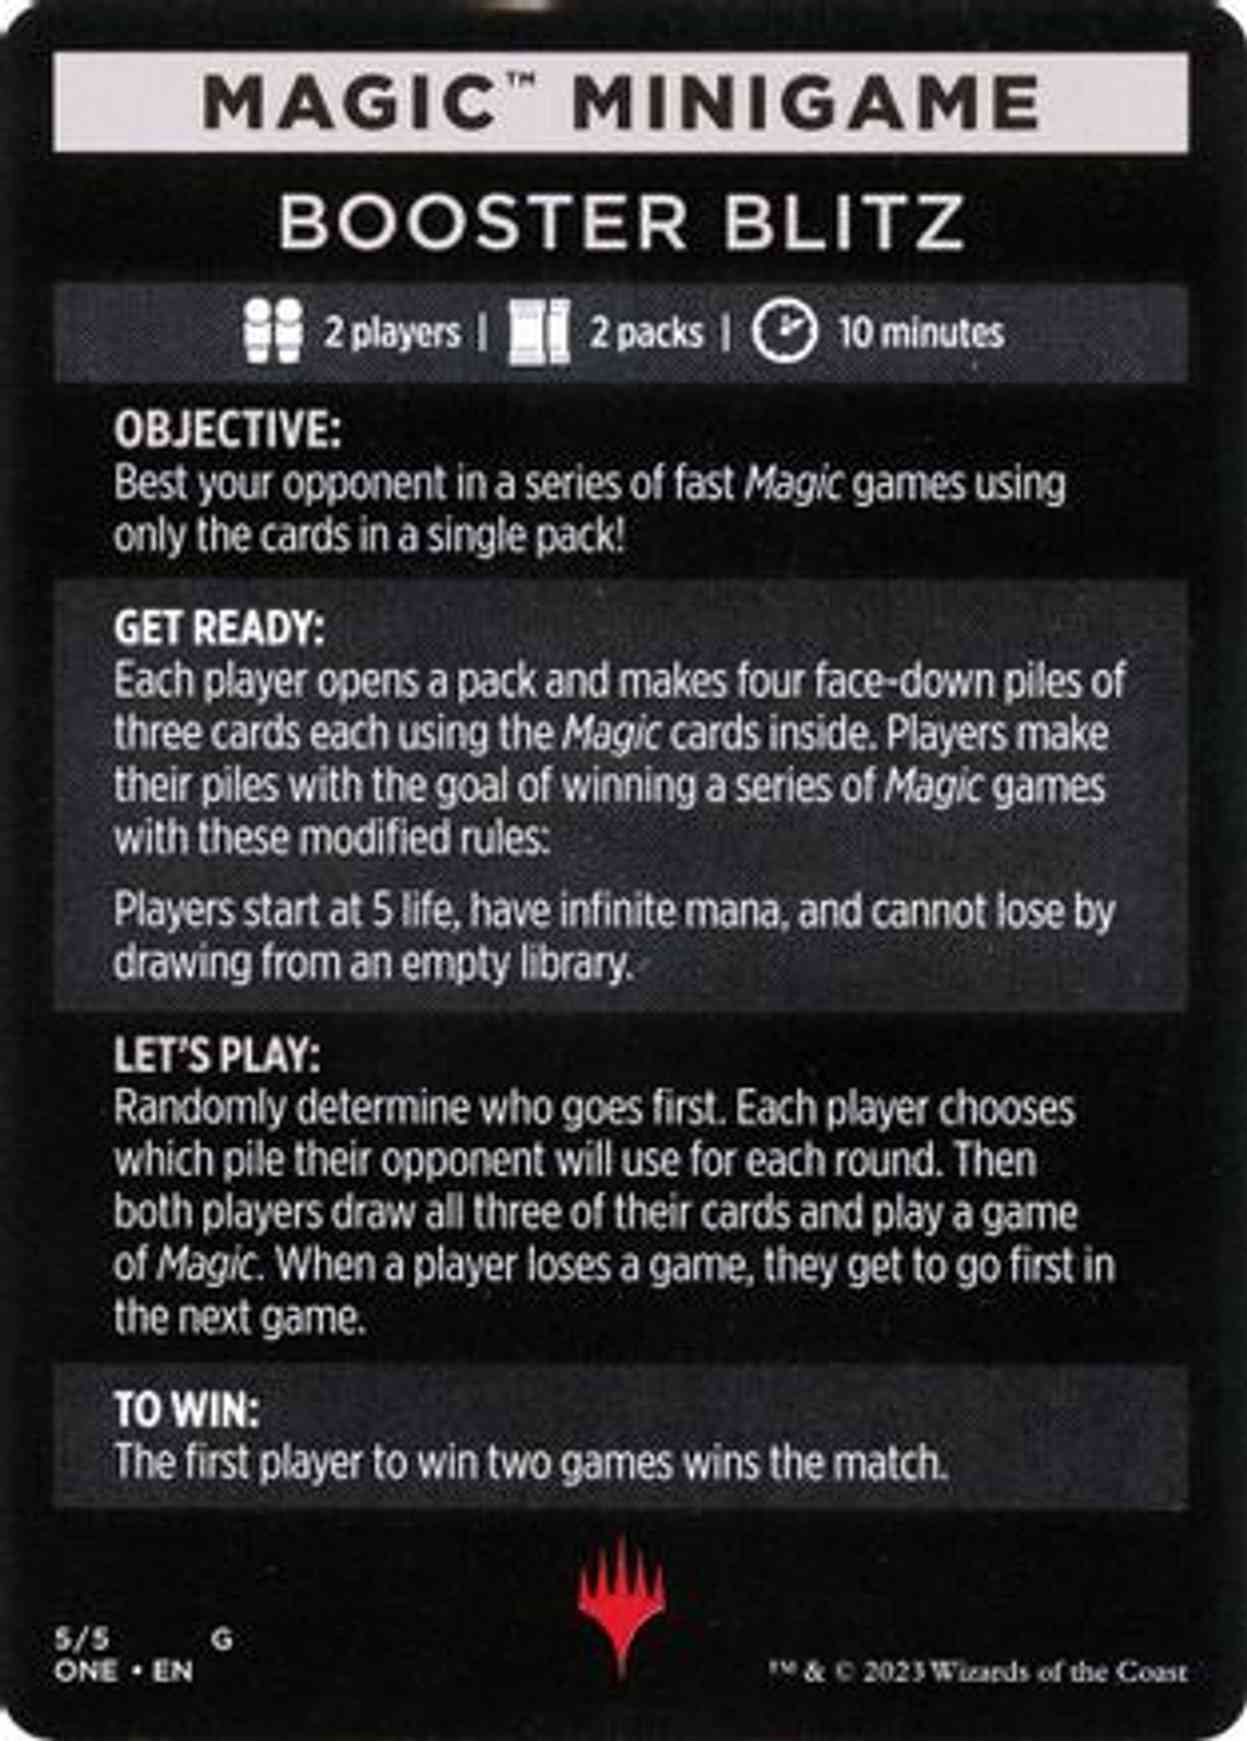 Magic Minigame: Booster Blitz magic card front